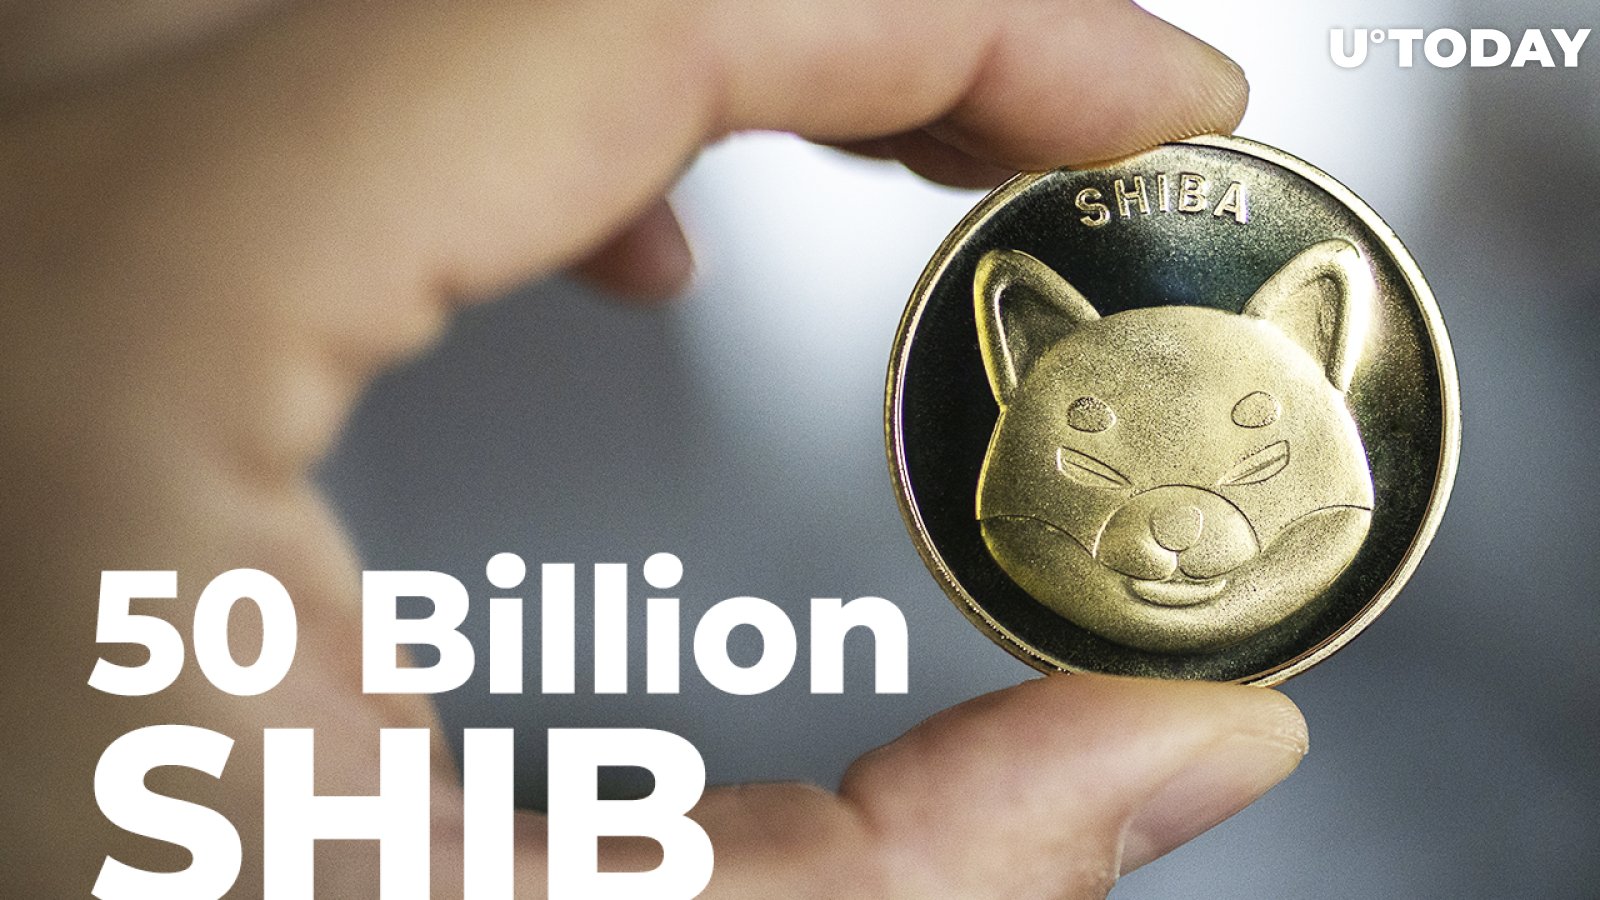 50 Billion SHIB Grabbed by Top Ethereum Whale: Details